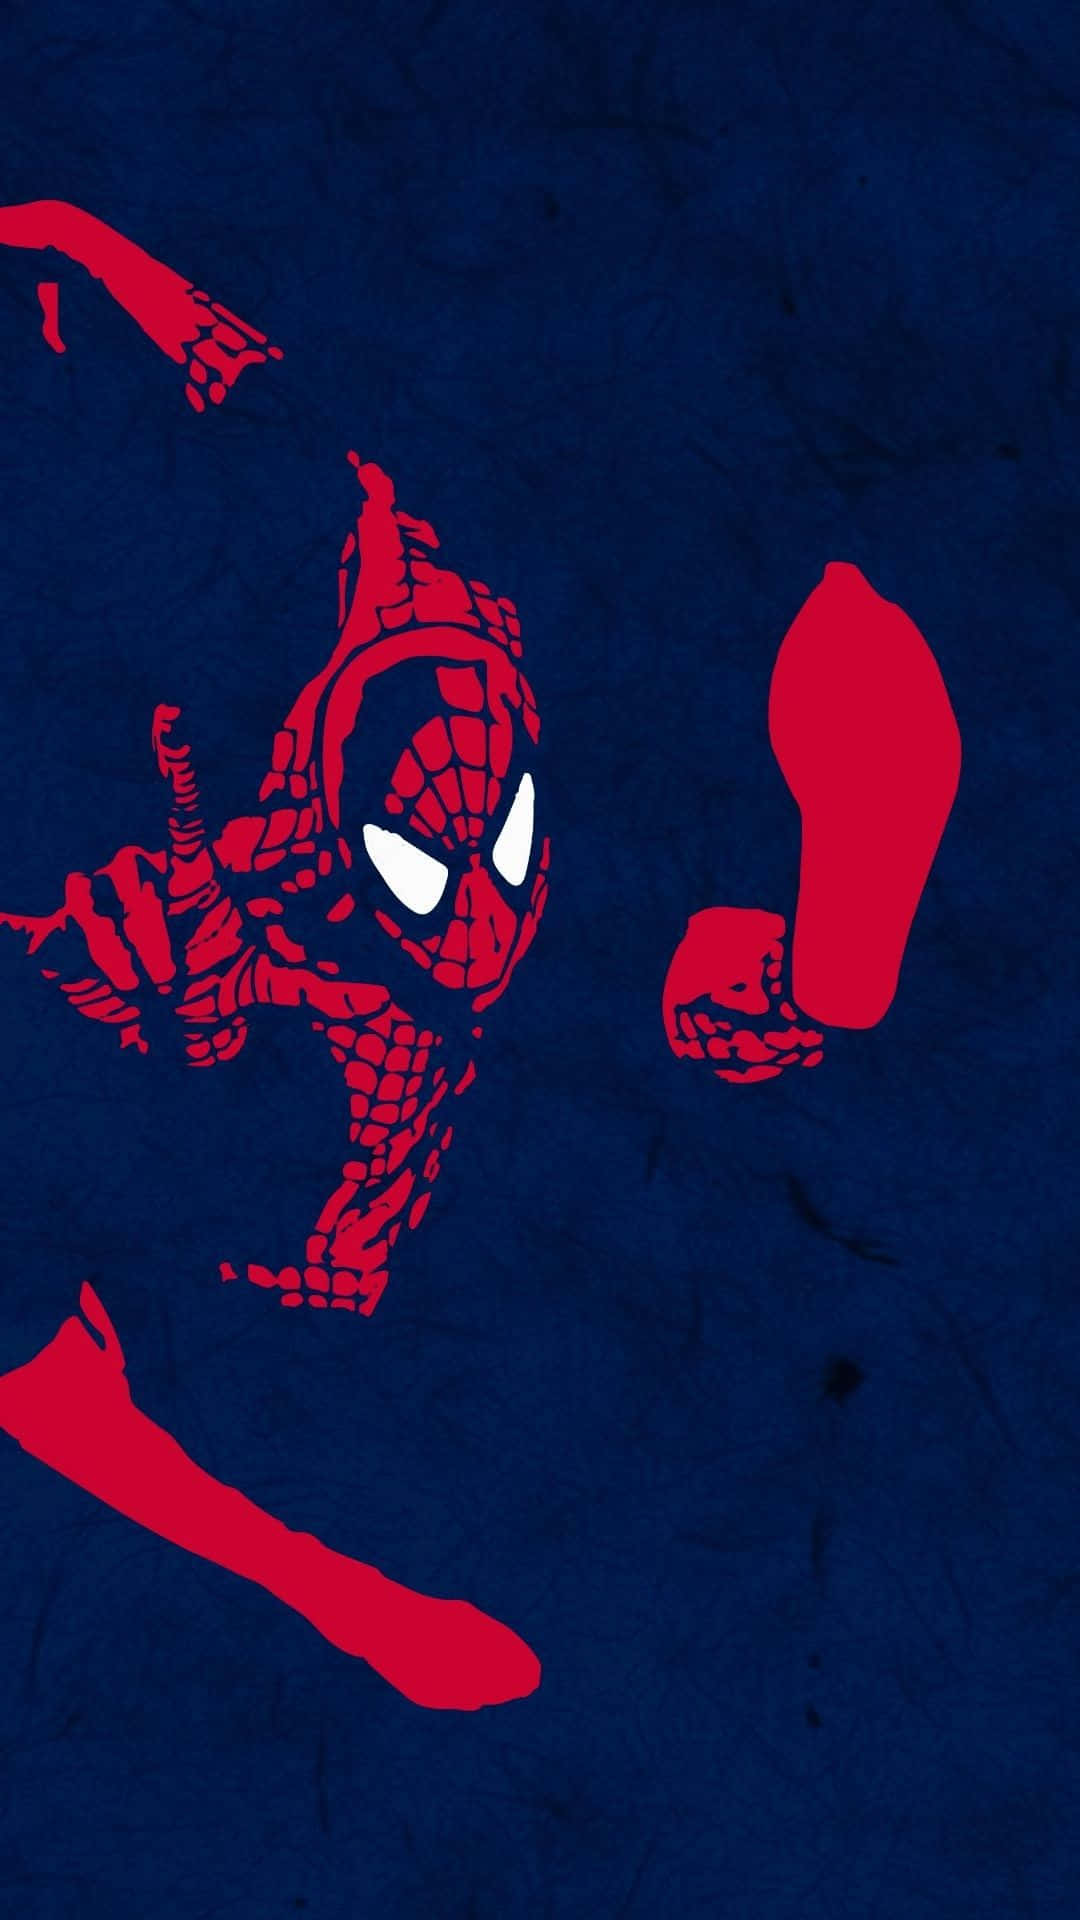 Free Spider Man Phone Wallpaper Downloads, Spider Man Phone Wallpaper for FREE